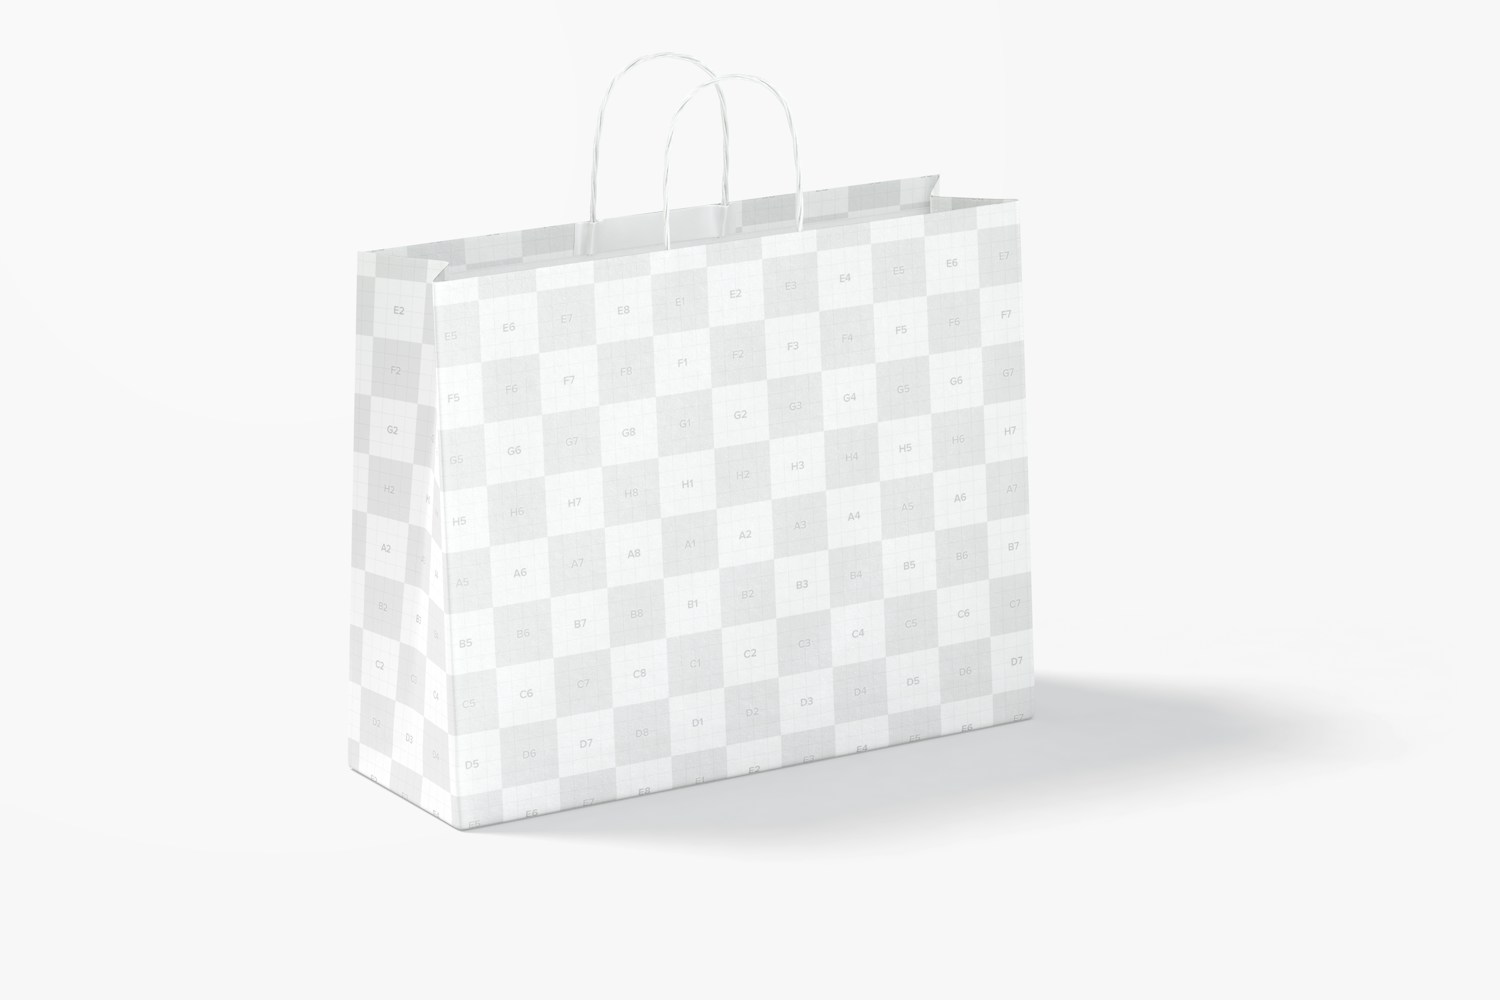 Jumbo Paper Shopping Bag Mockup